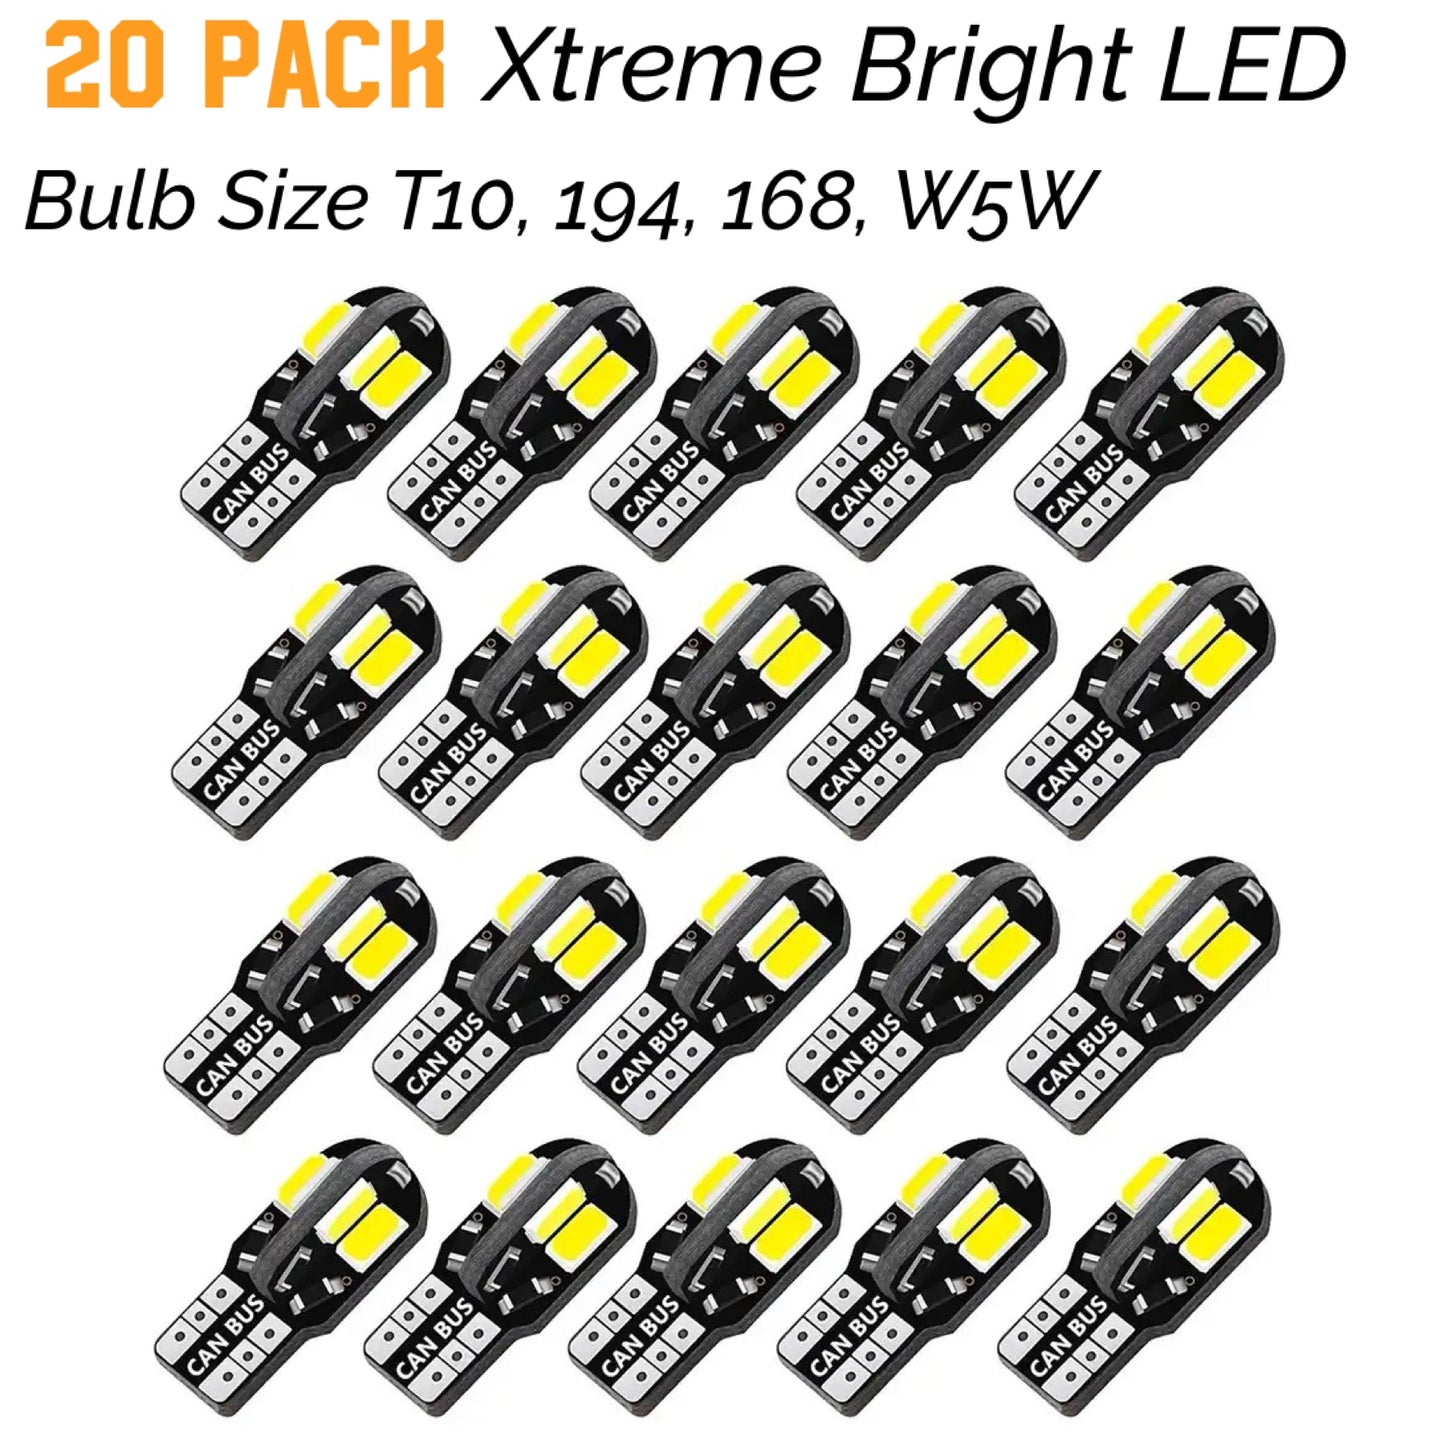 20 Pack Xtreme Bright LED Bulb Size T10, 194, 168, W5W